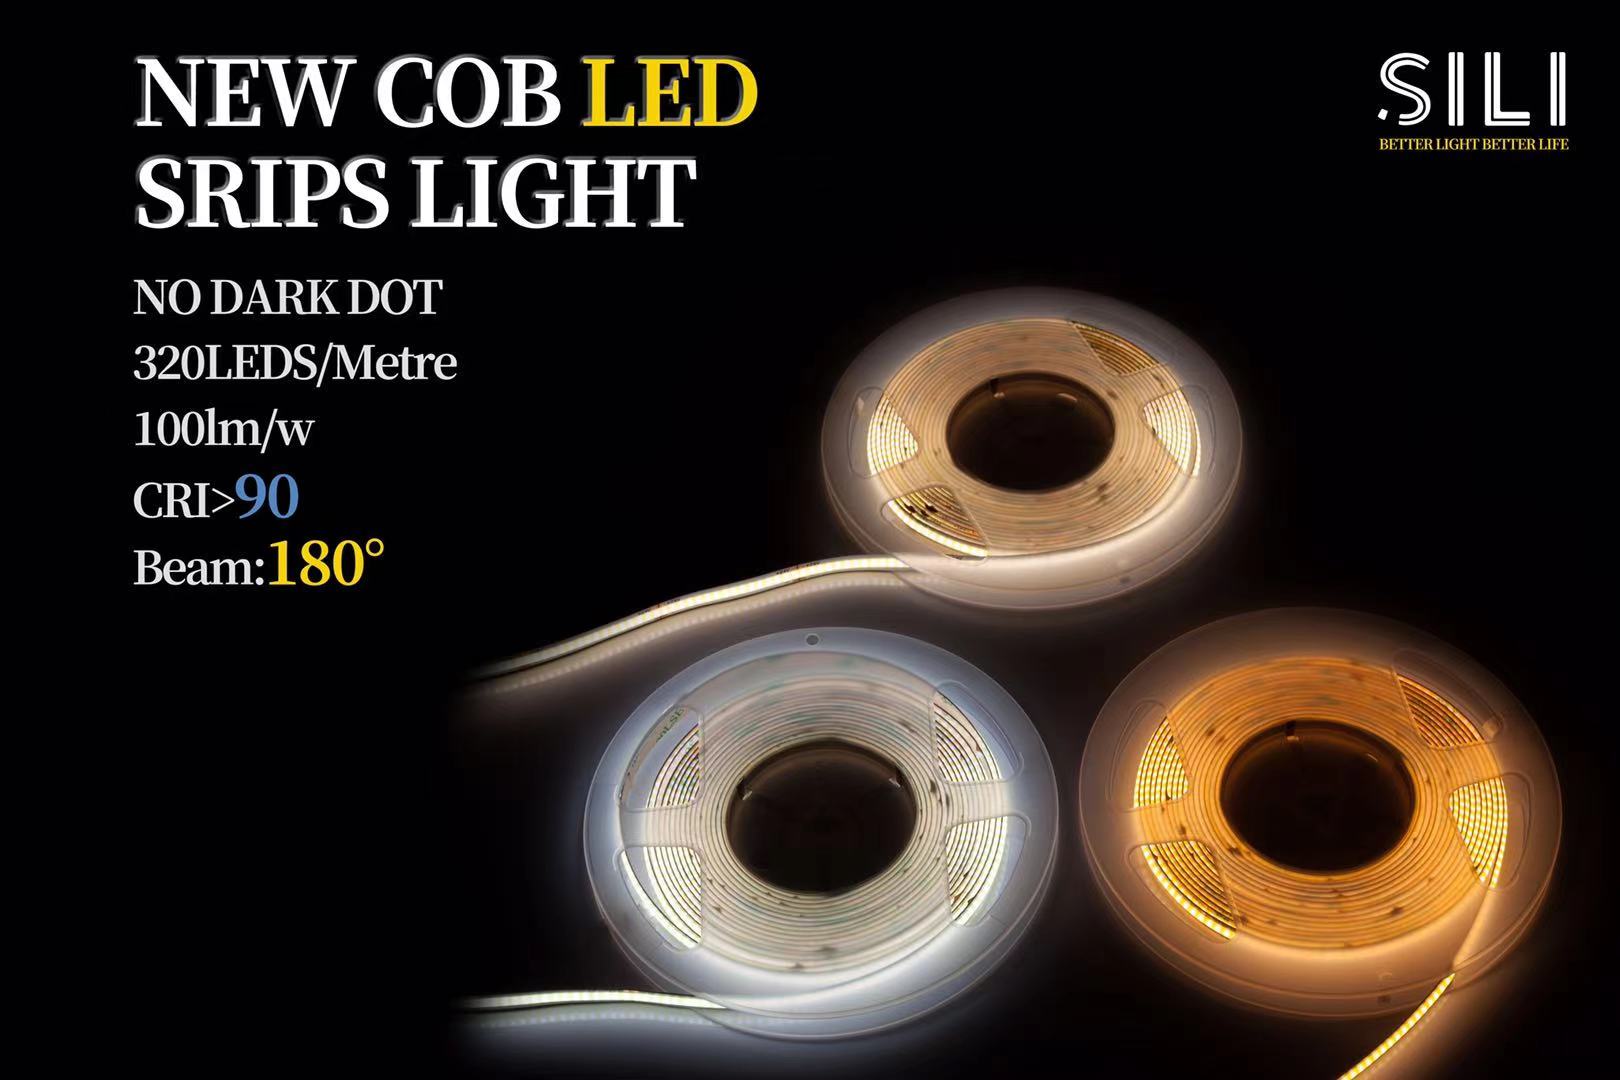 New cob led light strip no dark dot 320leds metre 100lm w beam: 180°